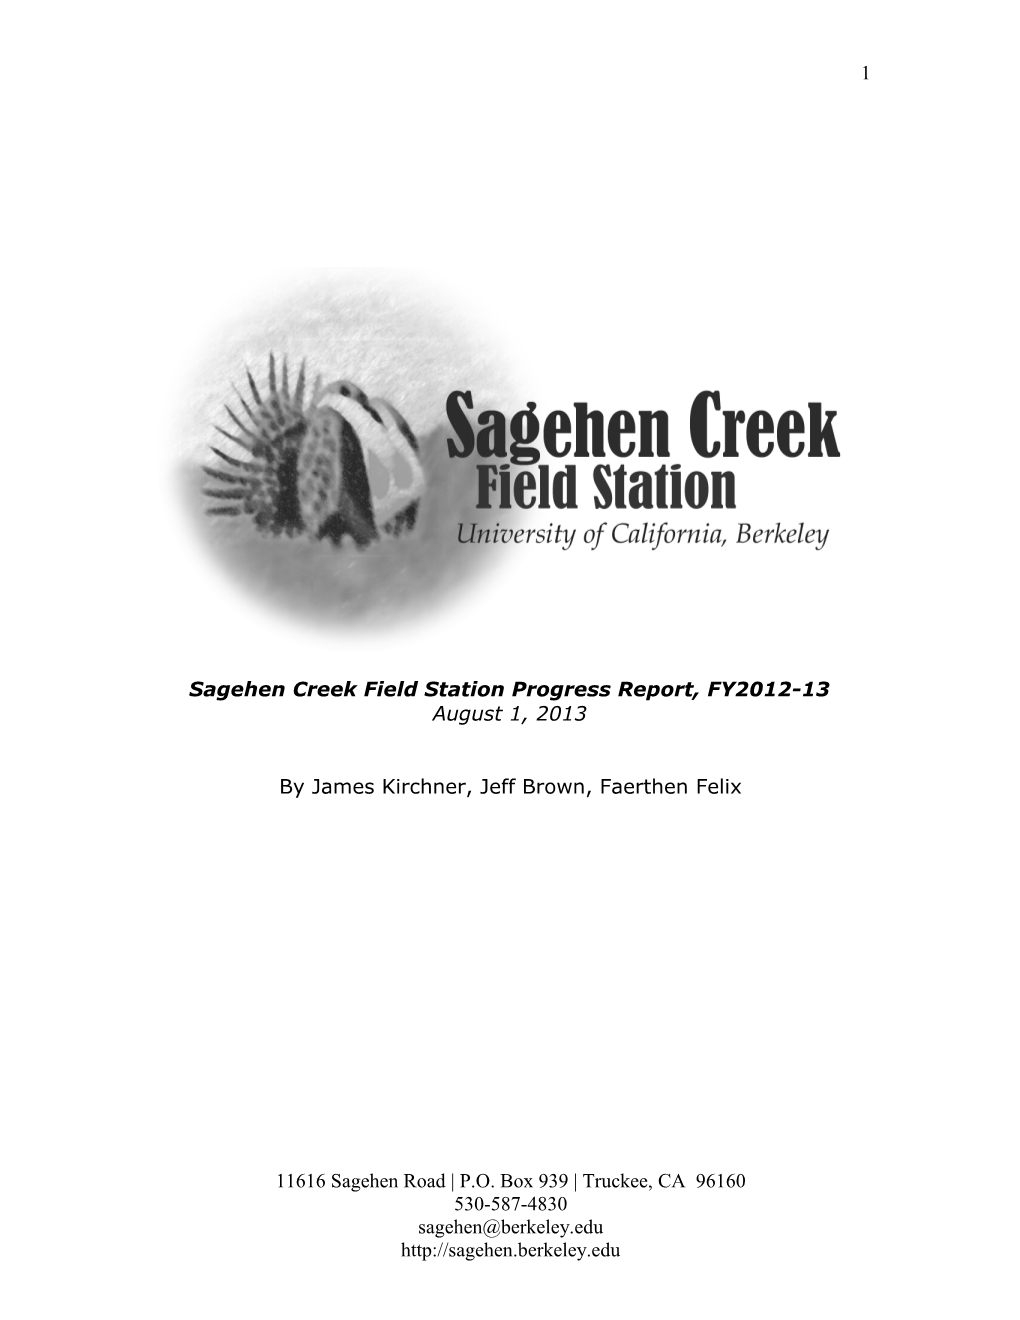 Sagehen Creek Field Station Progress Report - 2013